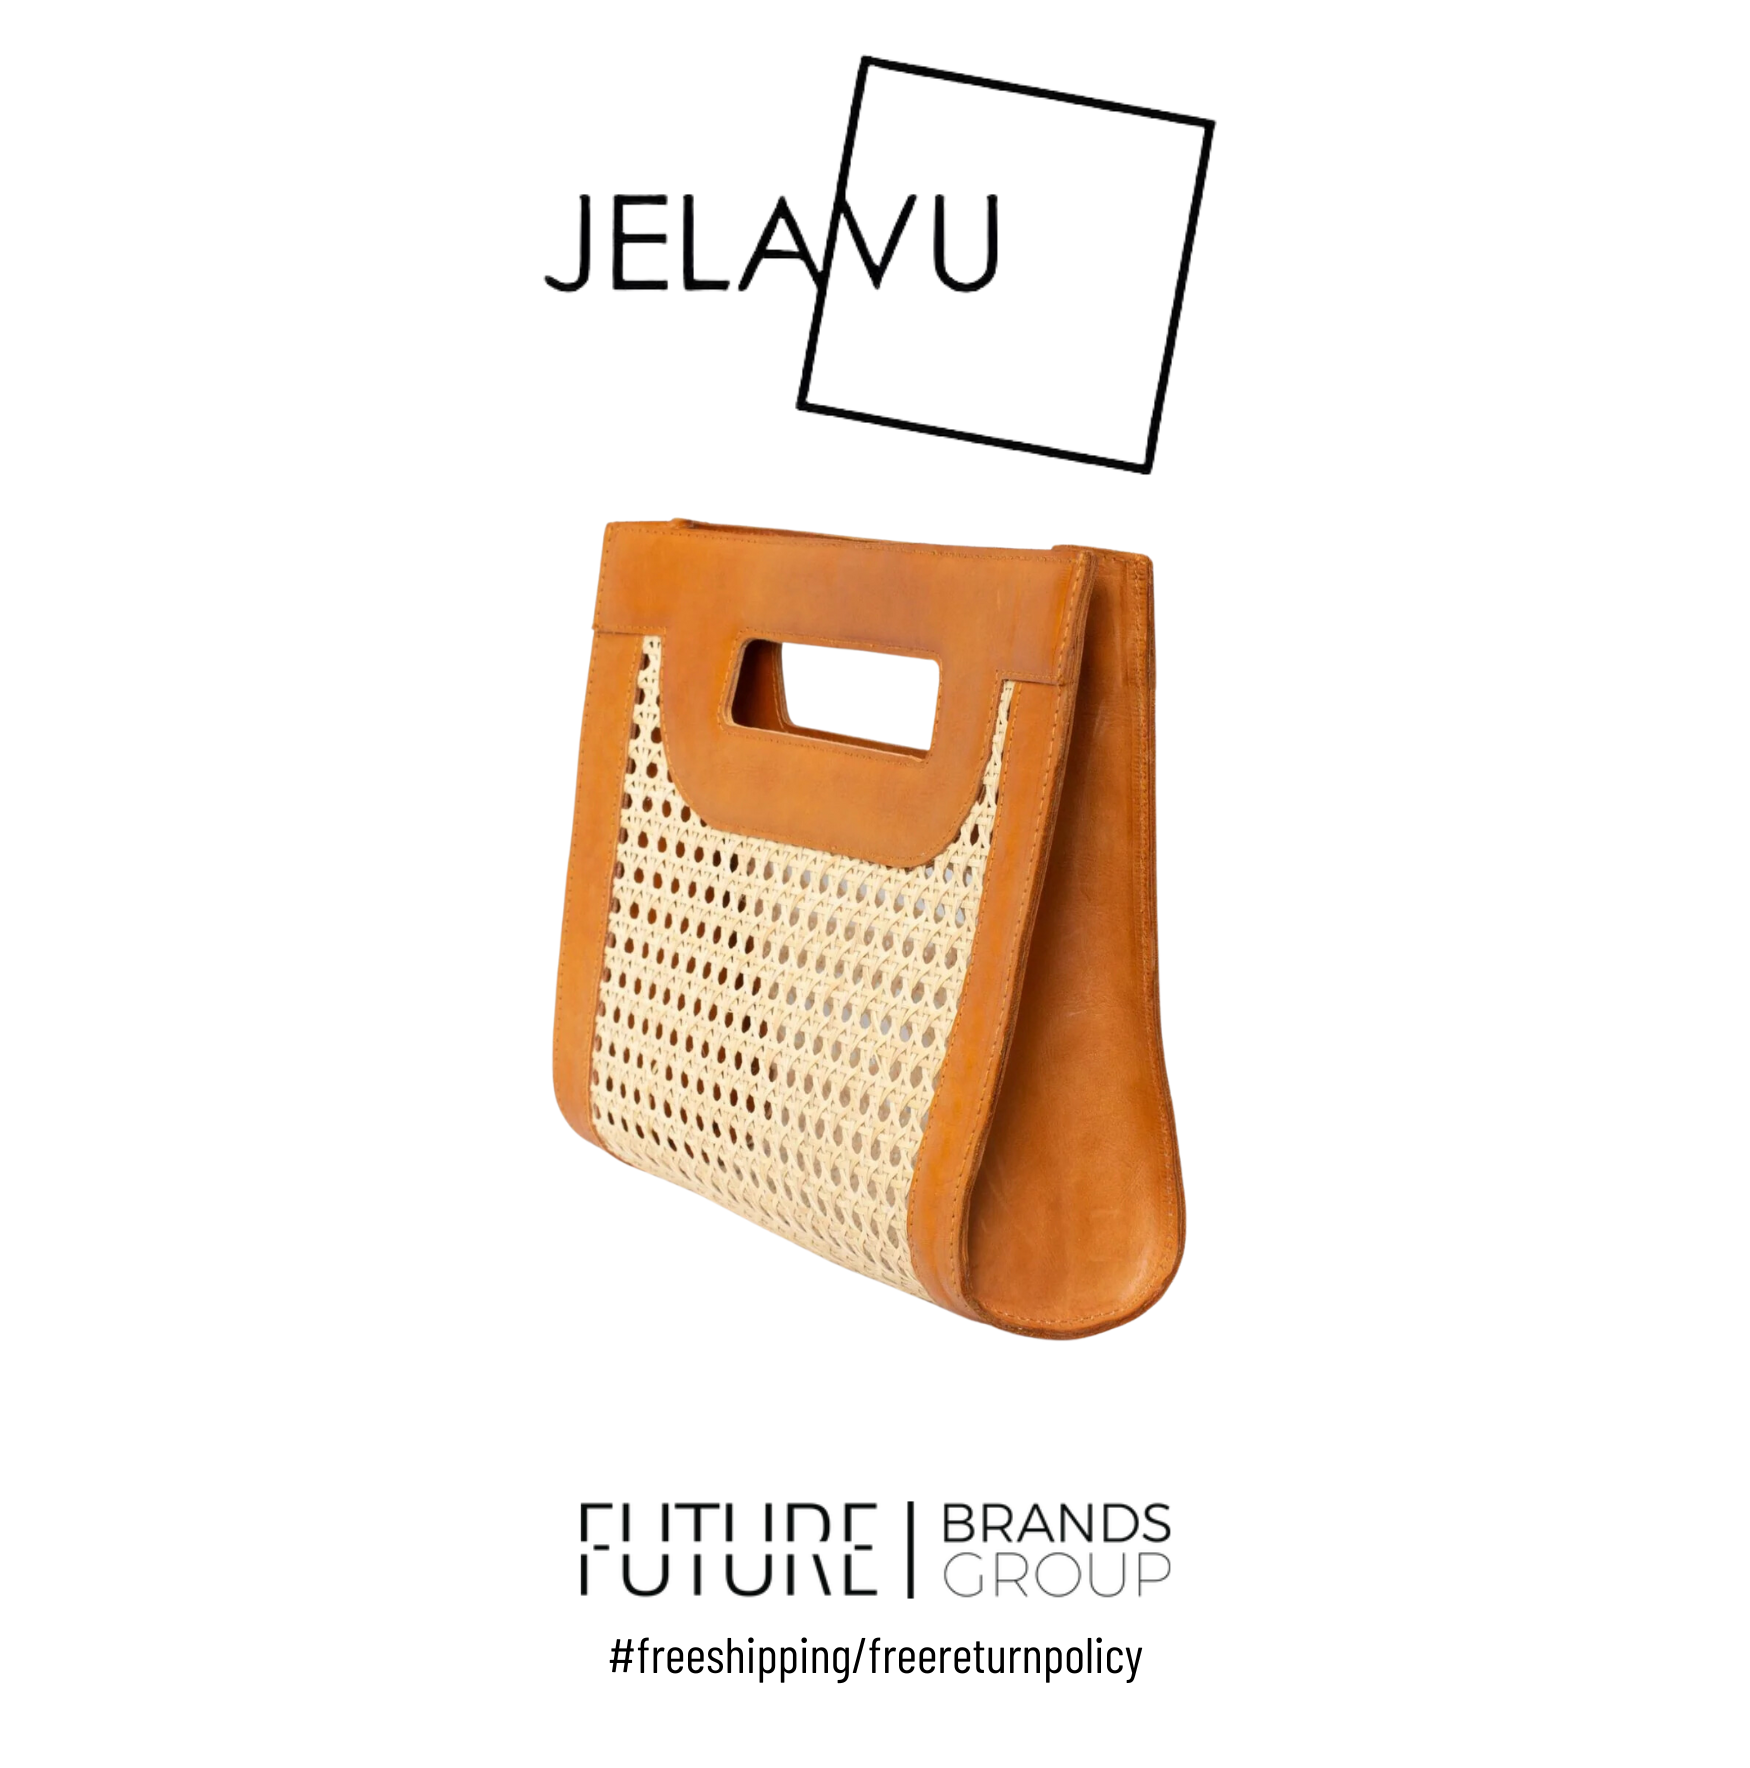 Venice Medium | Cane Leather Clutch | Future Brands Group